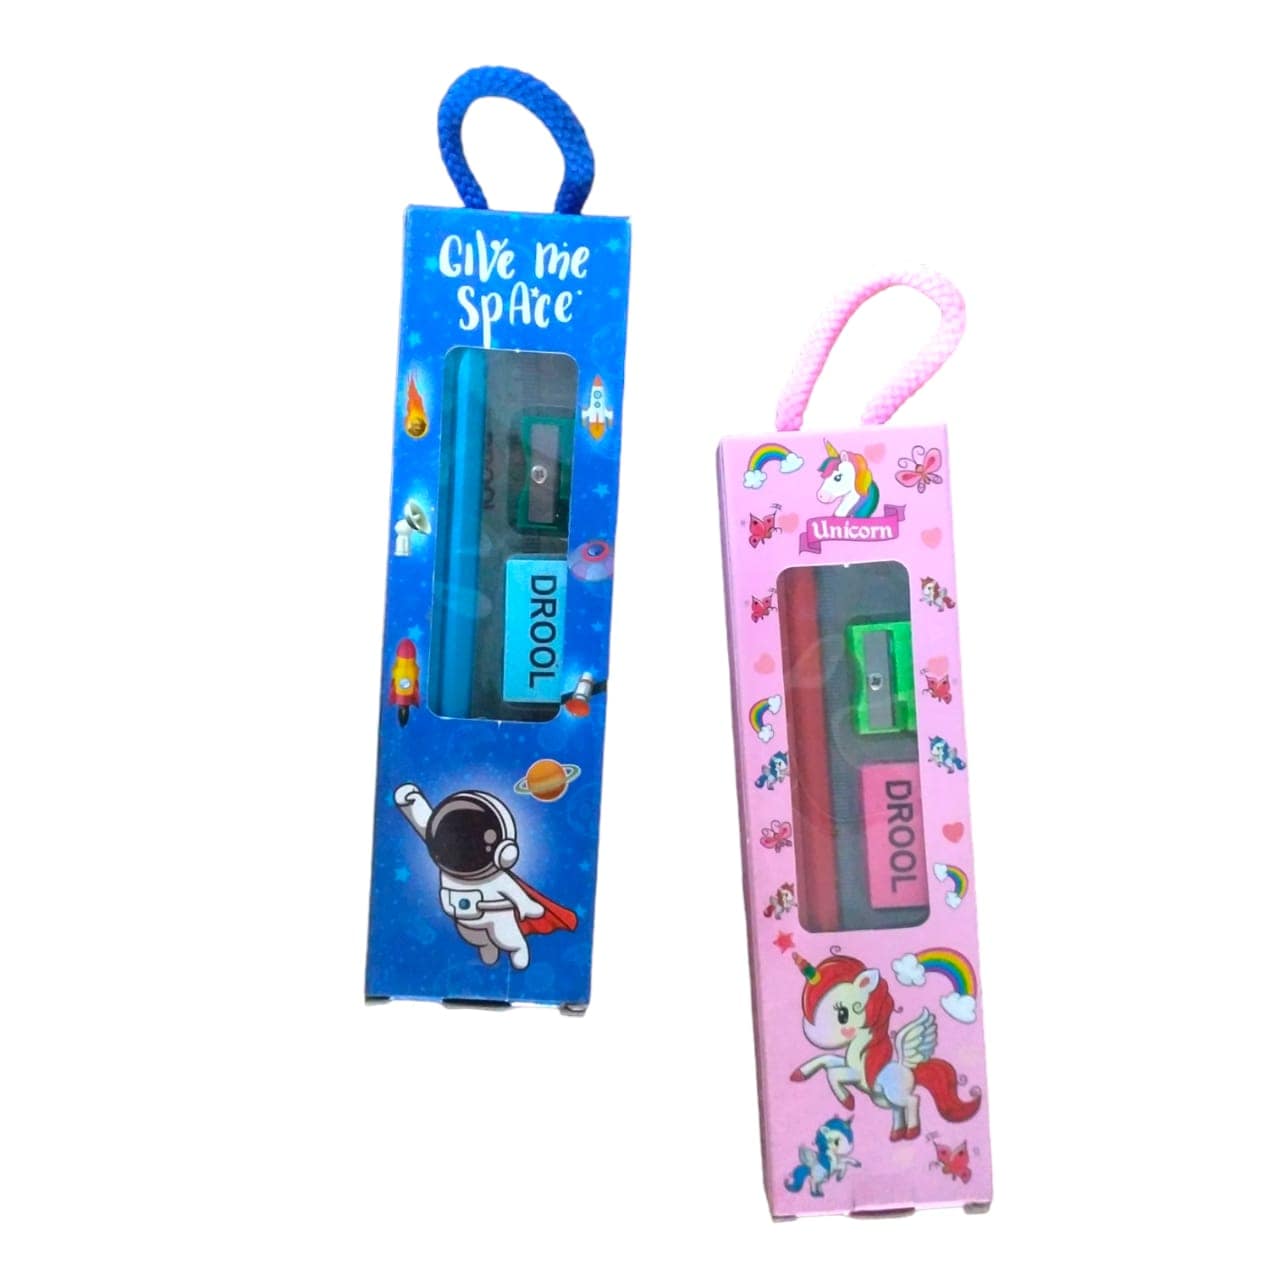 JIADA Gifts Online Cartoon Printed Sling Bags Pack of 6 (for Girls)  Multicolor & Jiada Return